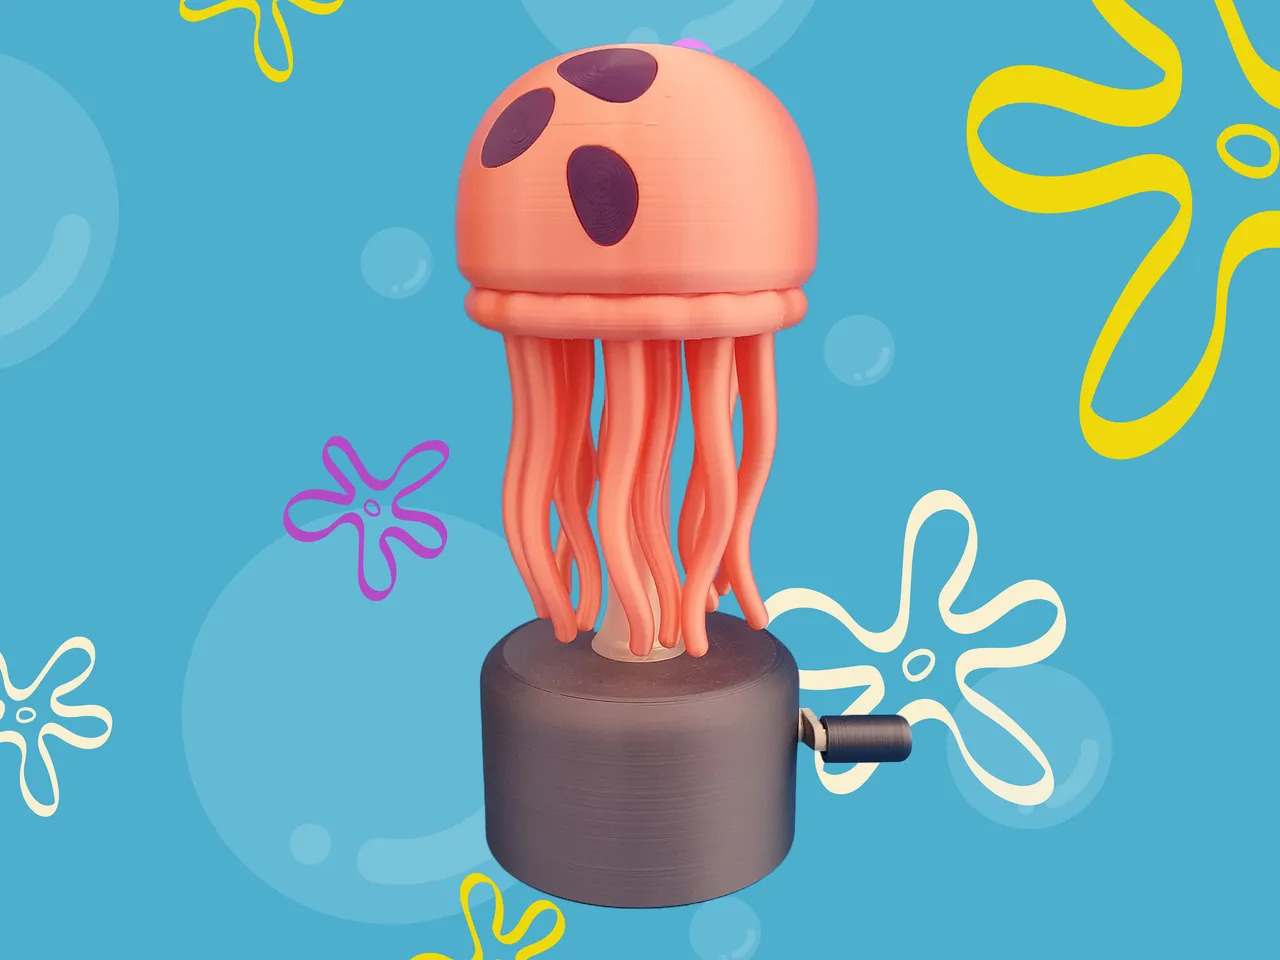 jellyfish from spongebob